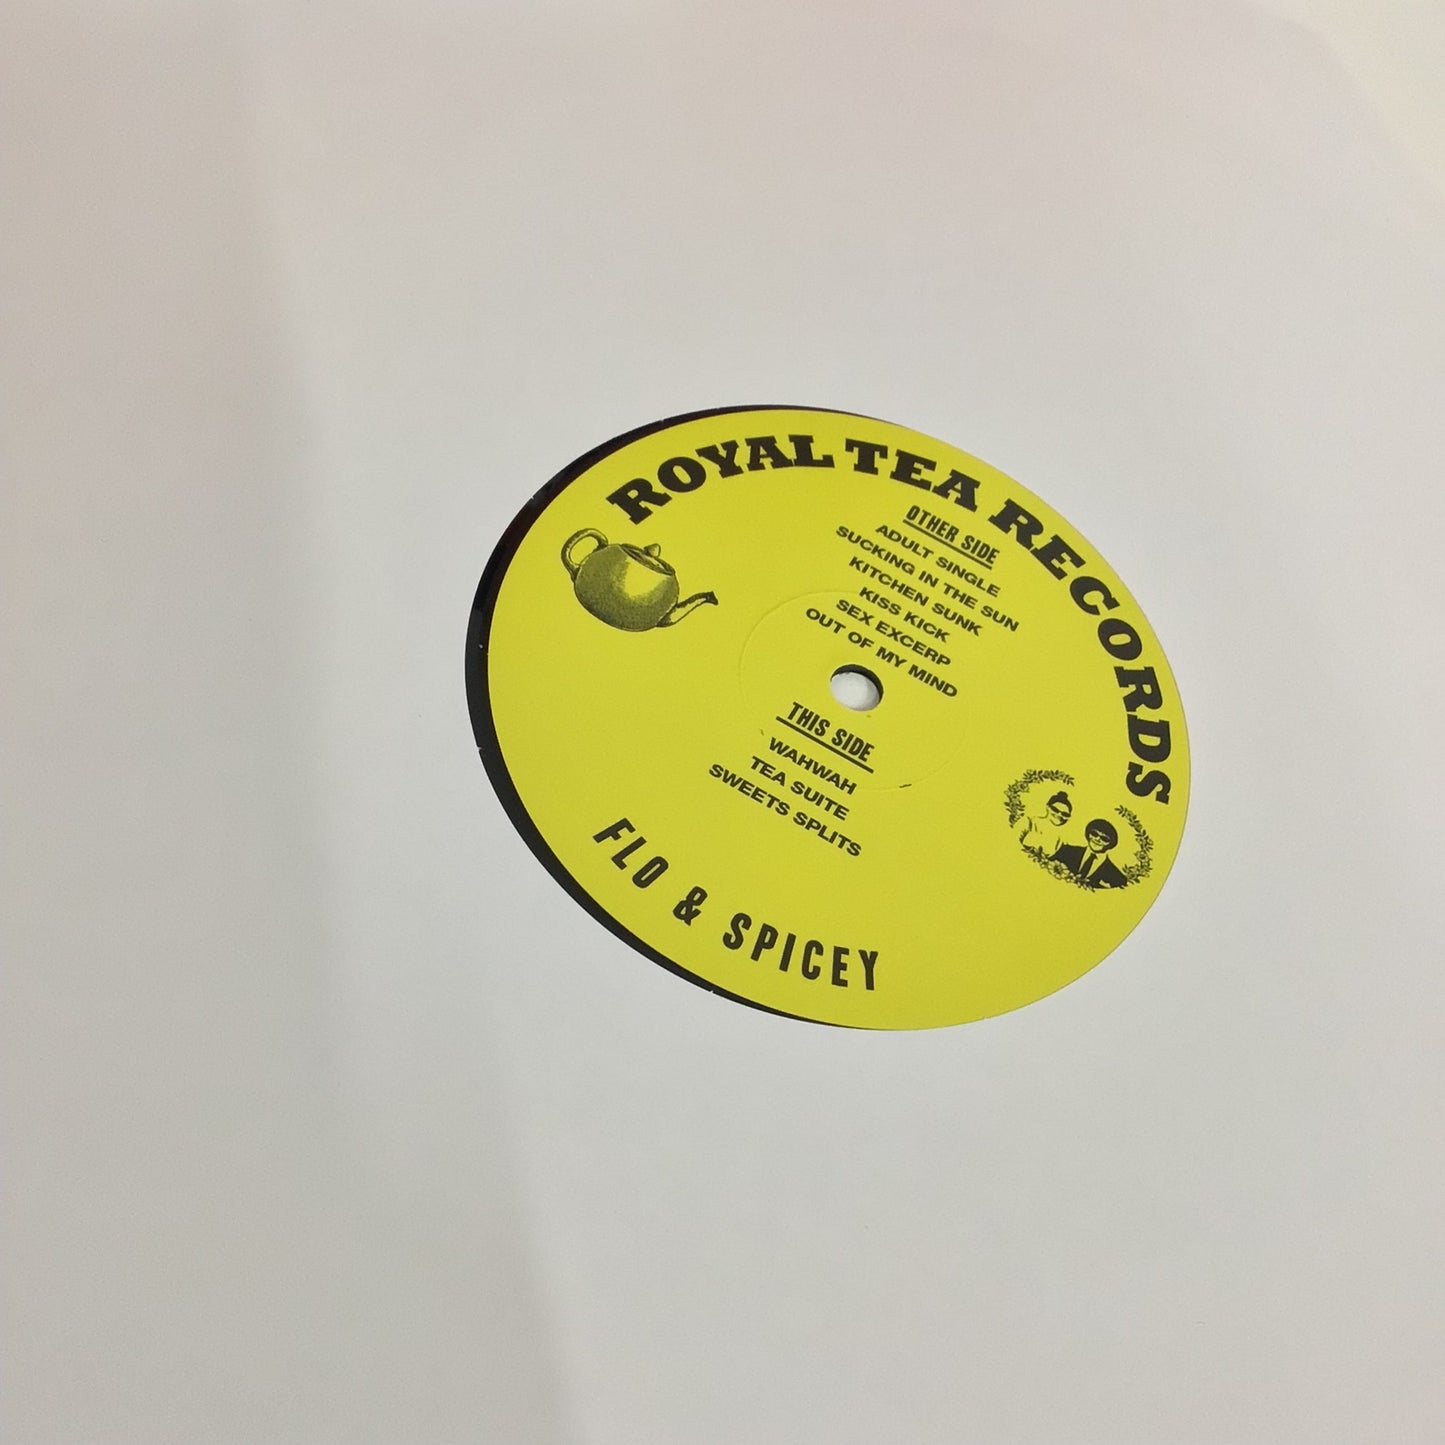 Flo & Spicey - Flo & Spicey’s Tea Set, Royal Tea Records, Vinyl Record